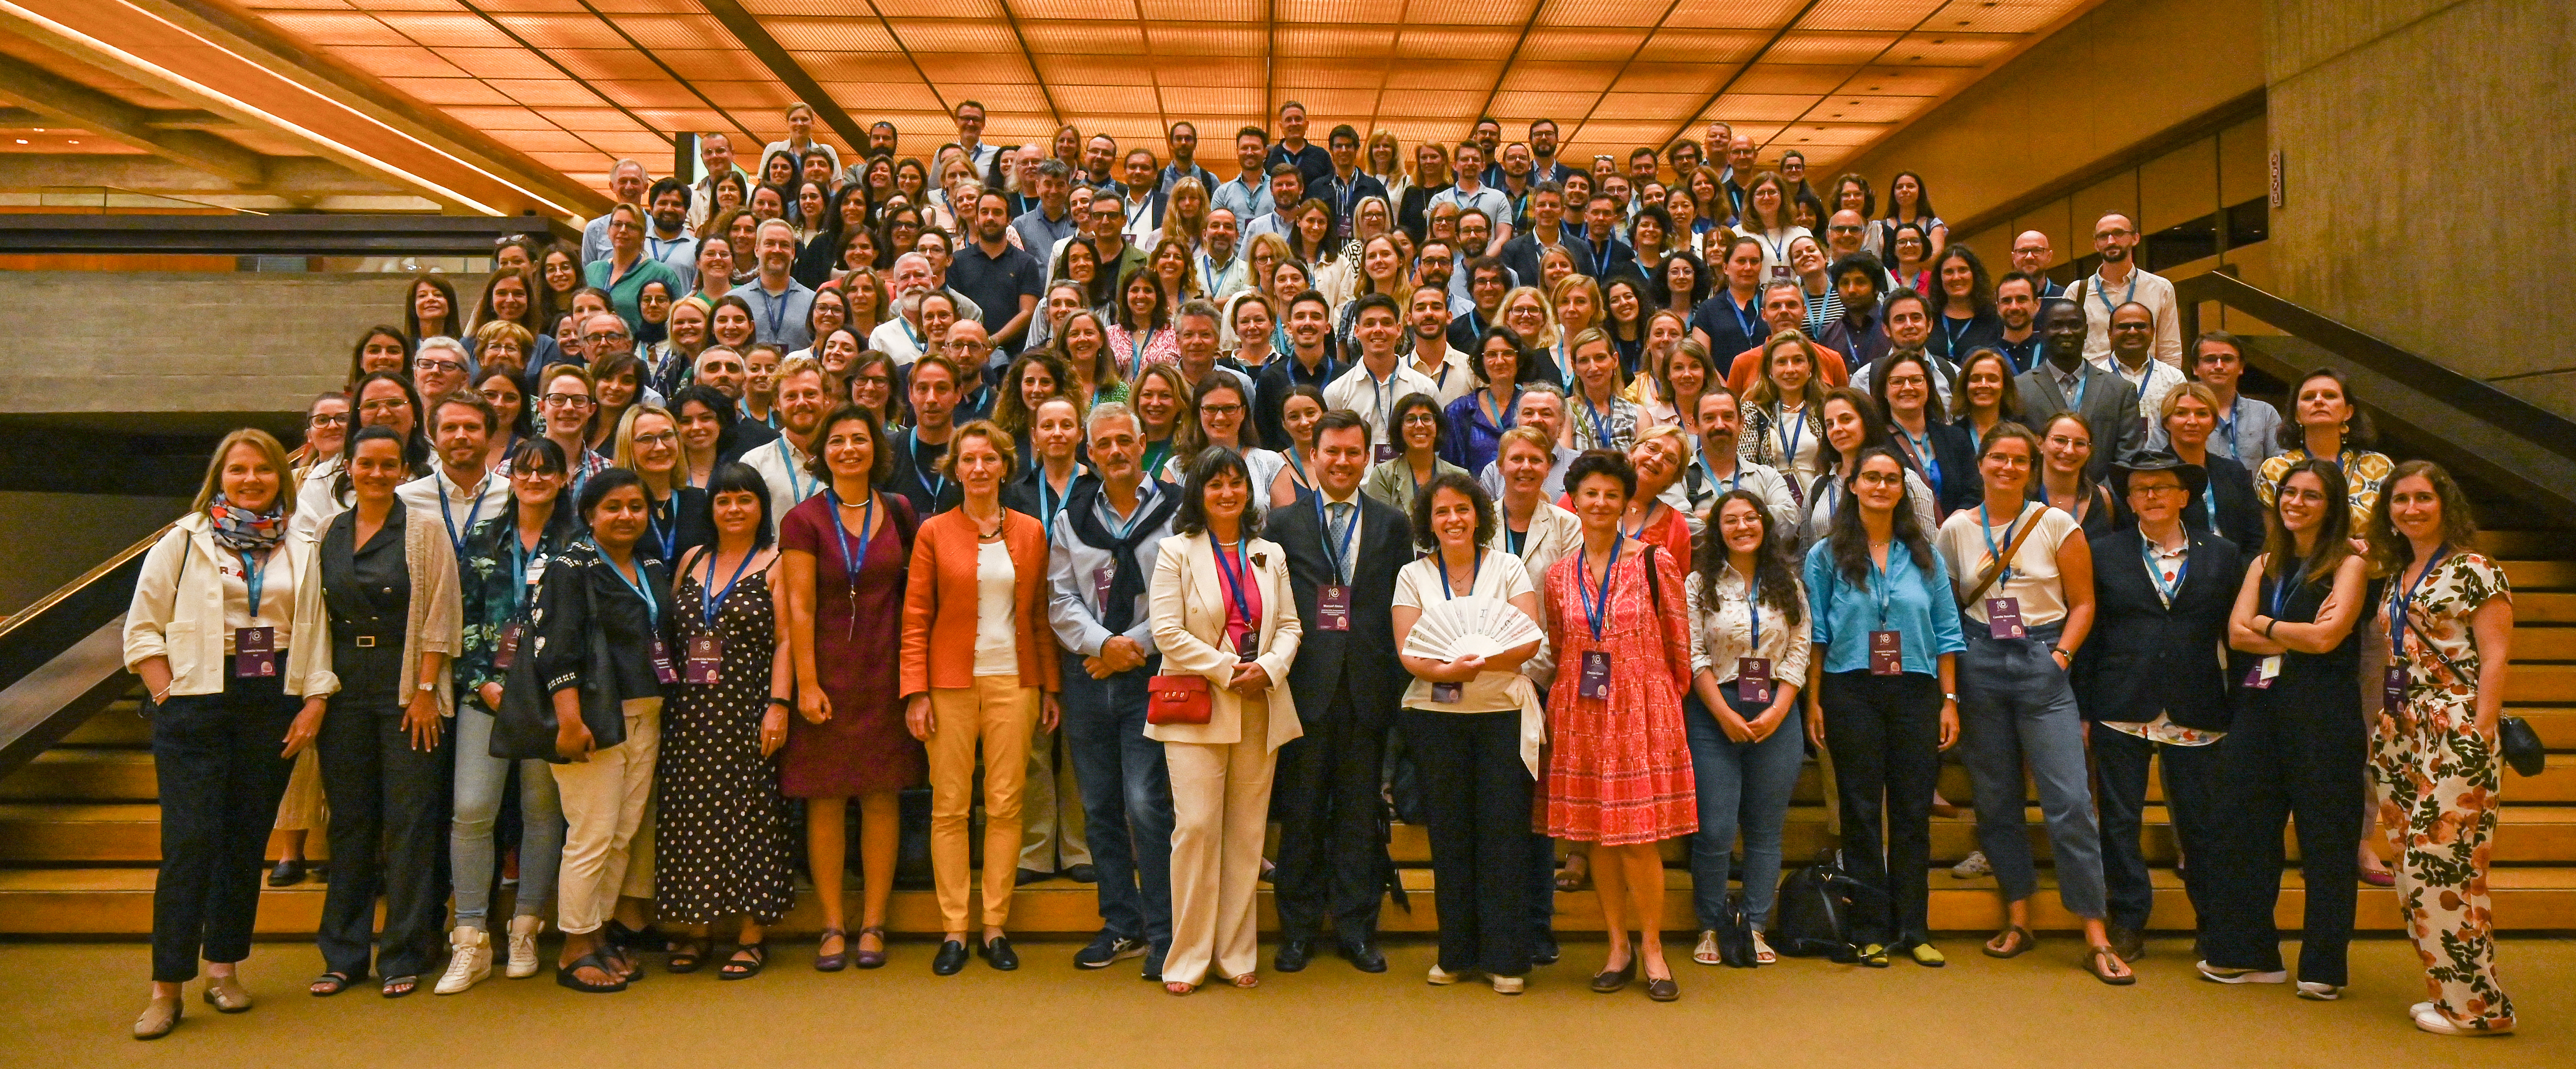 EU-LIFE 10th anniversary conference